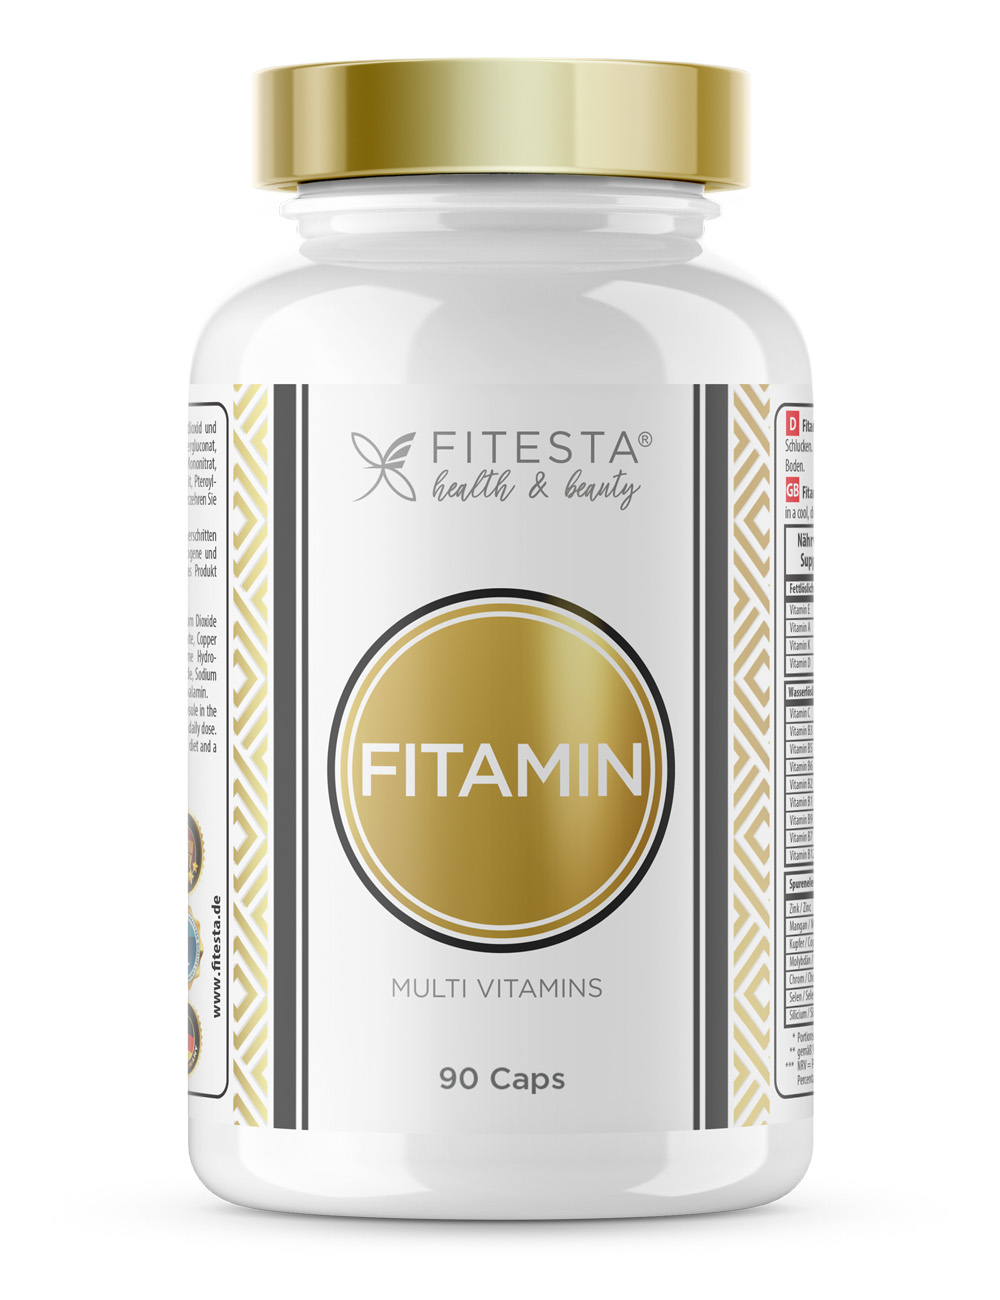 Витаминный комплекс Fitesta fitamin, 90 кап